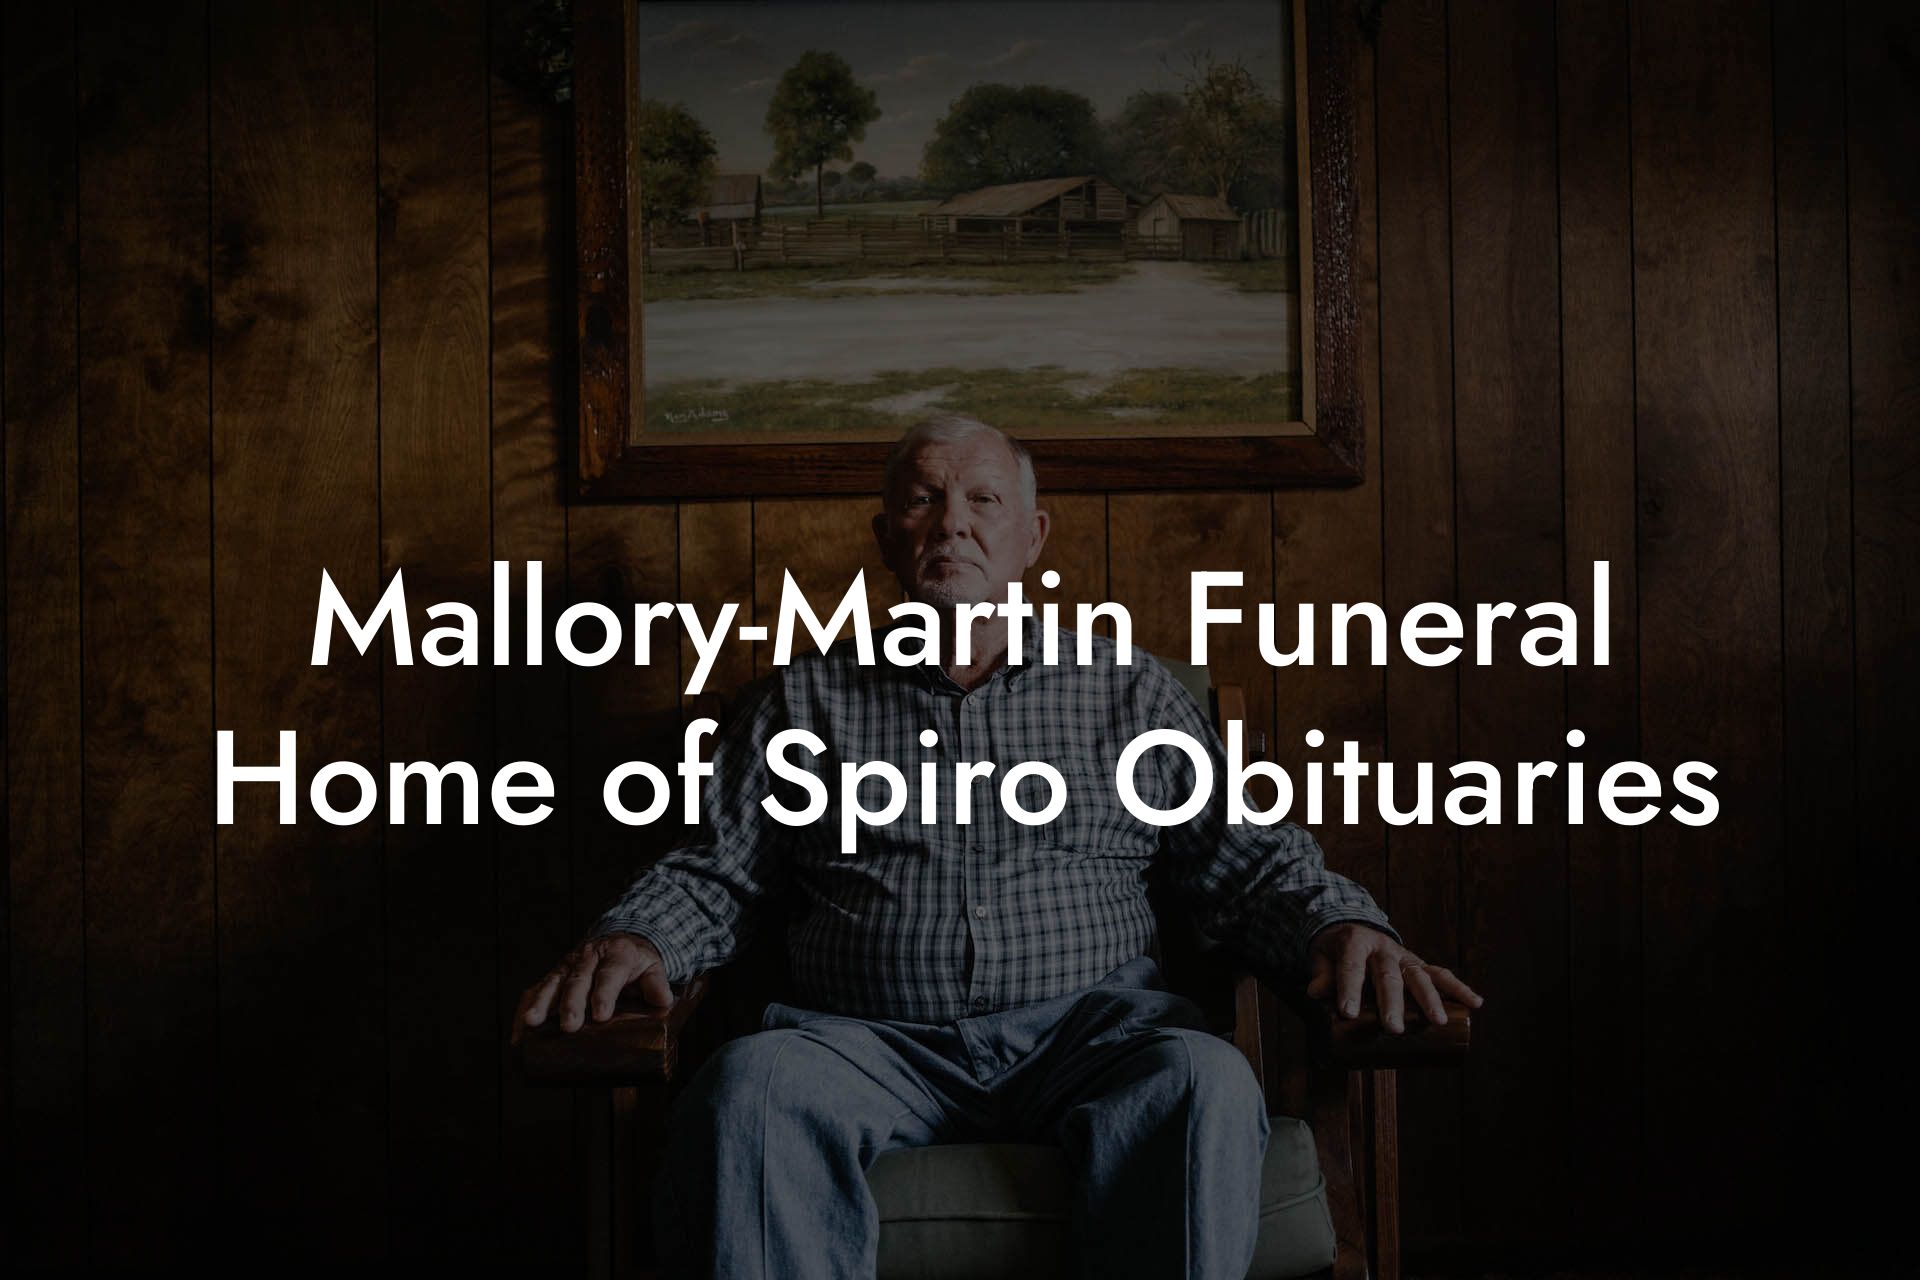 Mallory-Martin Funeral Home of Spiro Obituaries